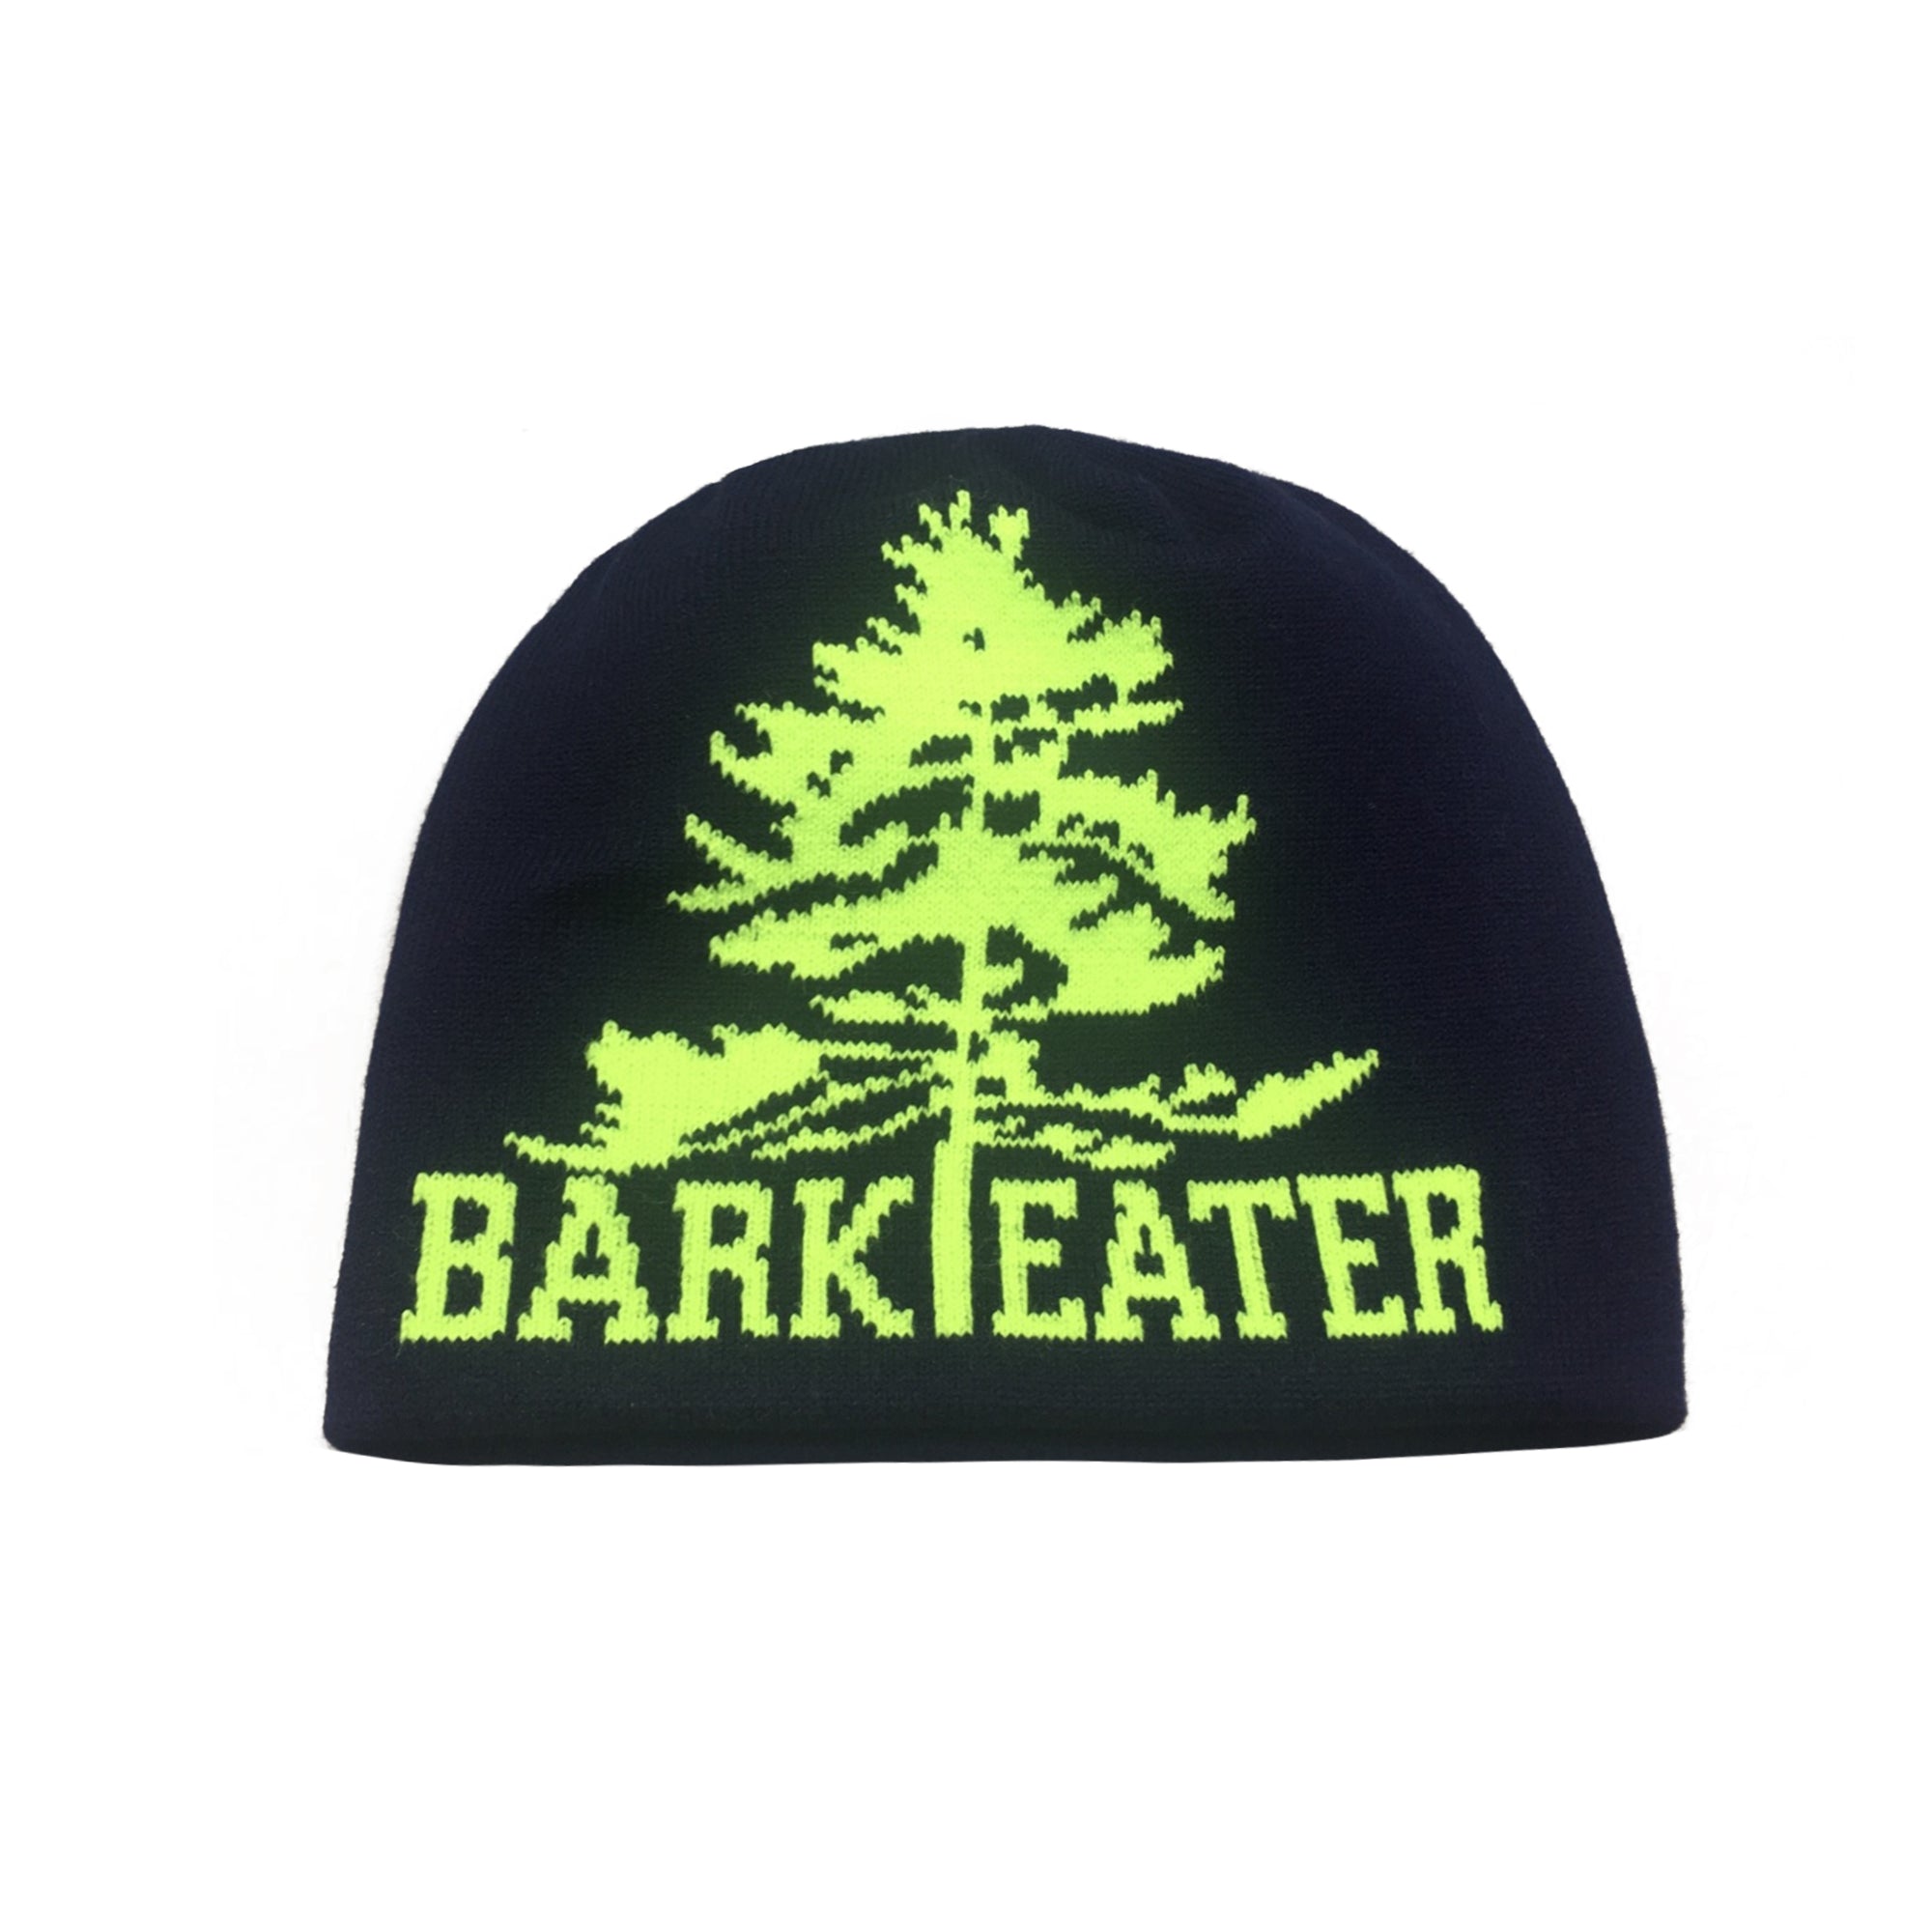 Bark Eater - Backcountry Beanie